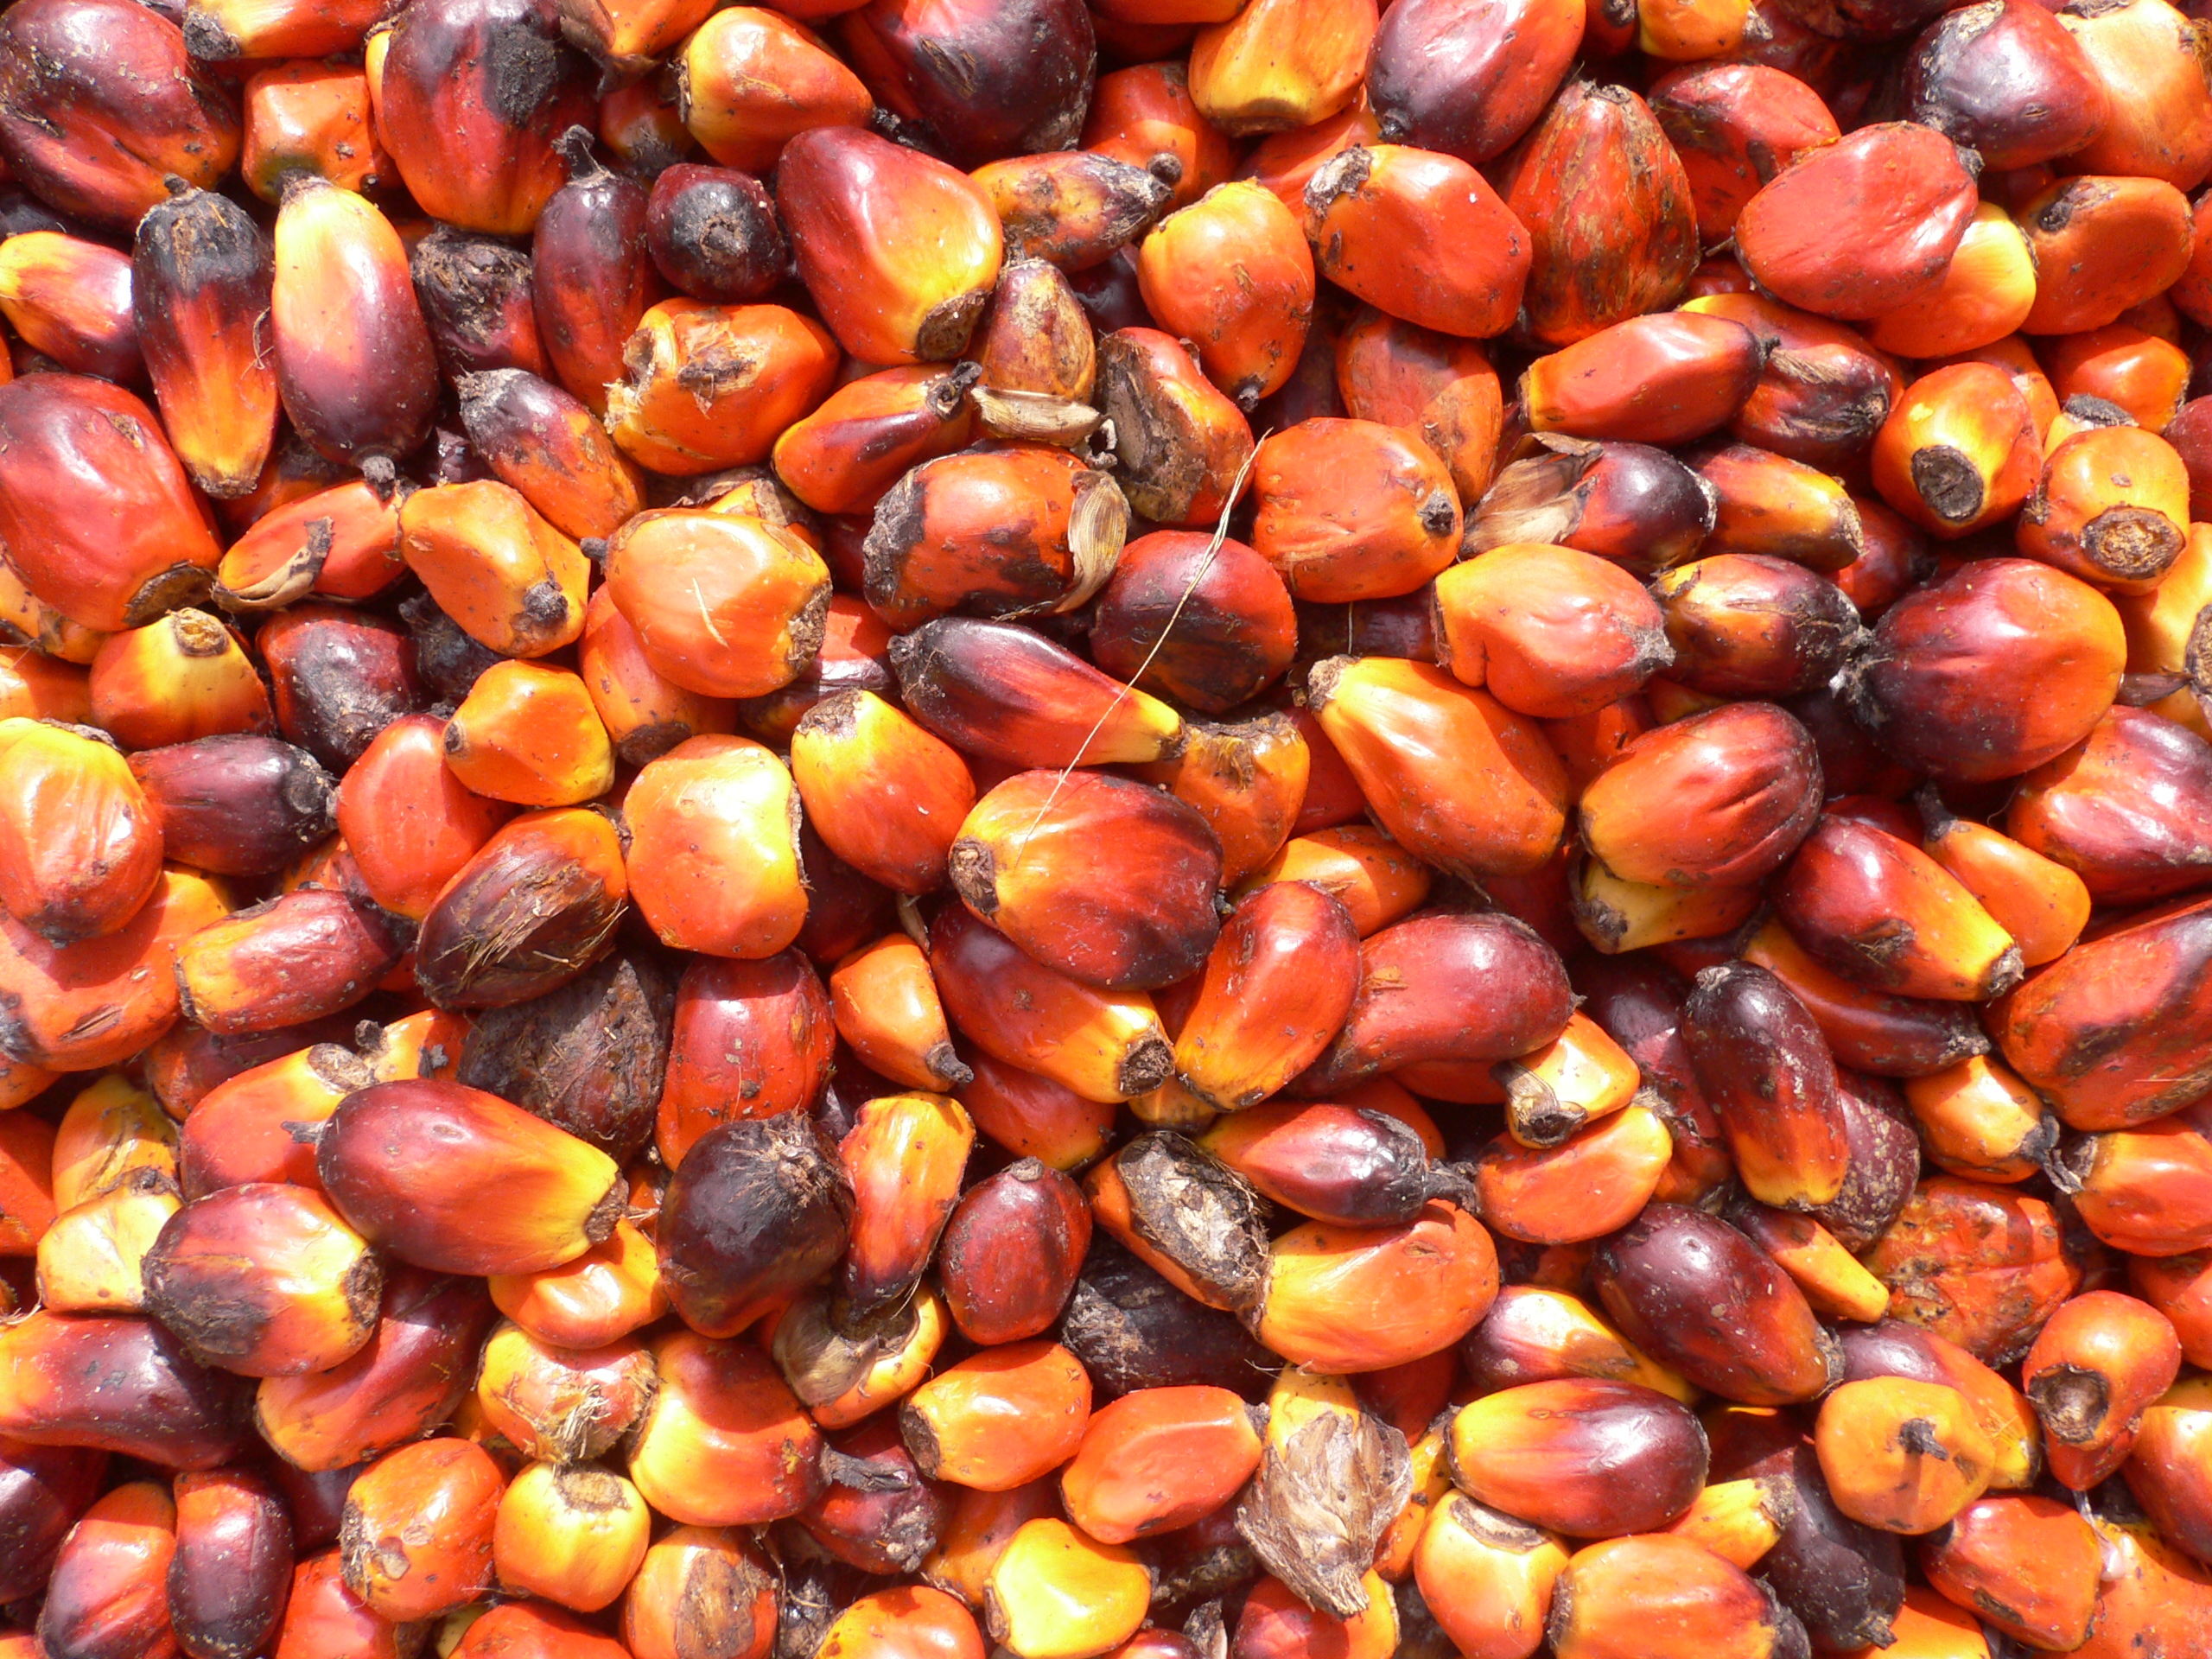 ‘Empty pocket season’: Dayak women farmers surviving the impacts of palm oil